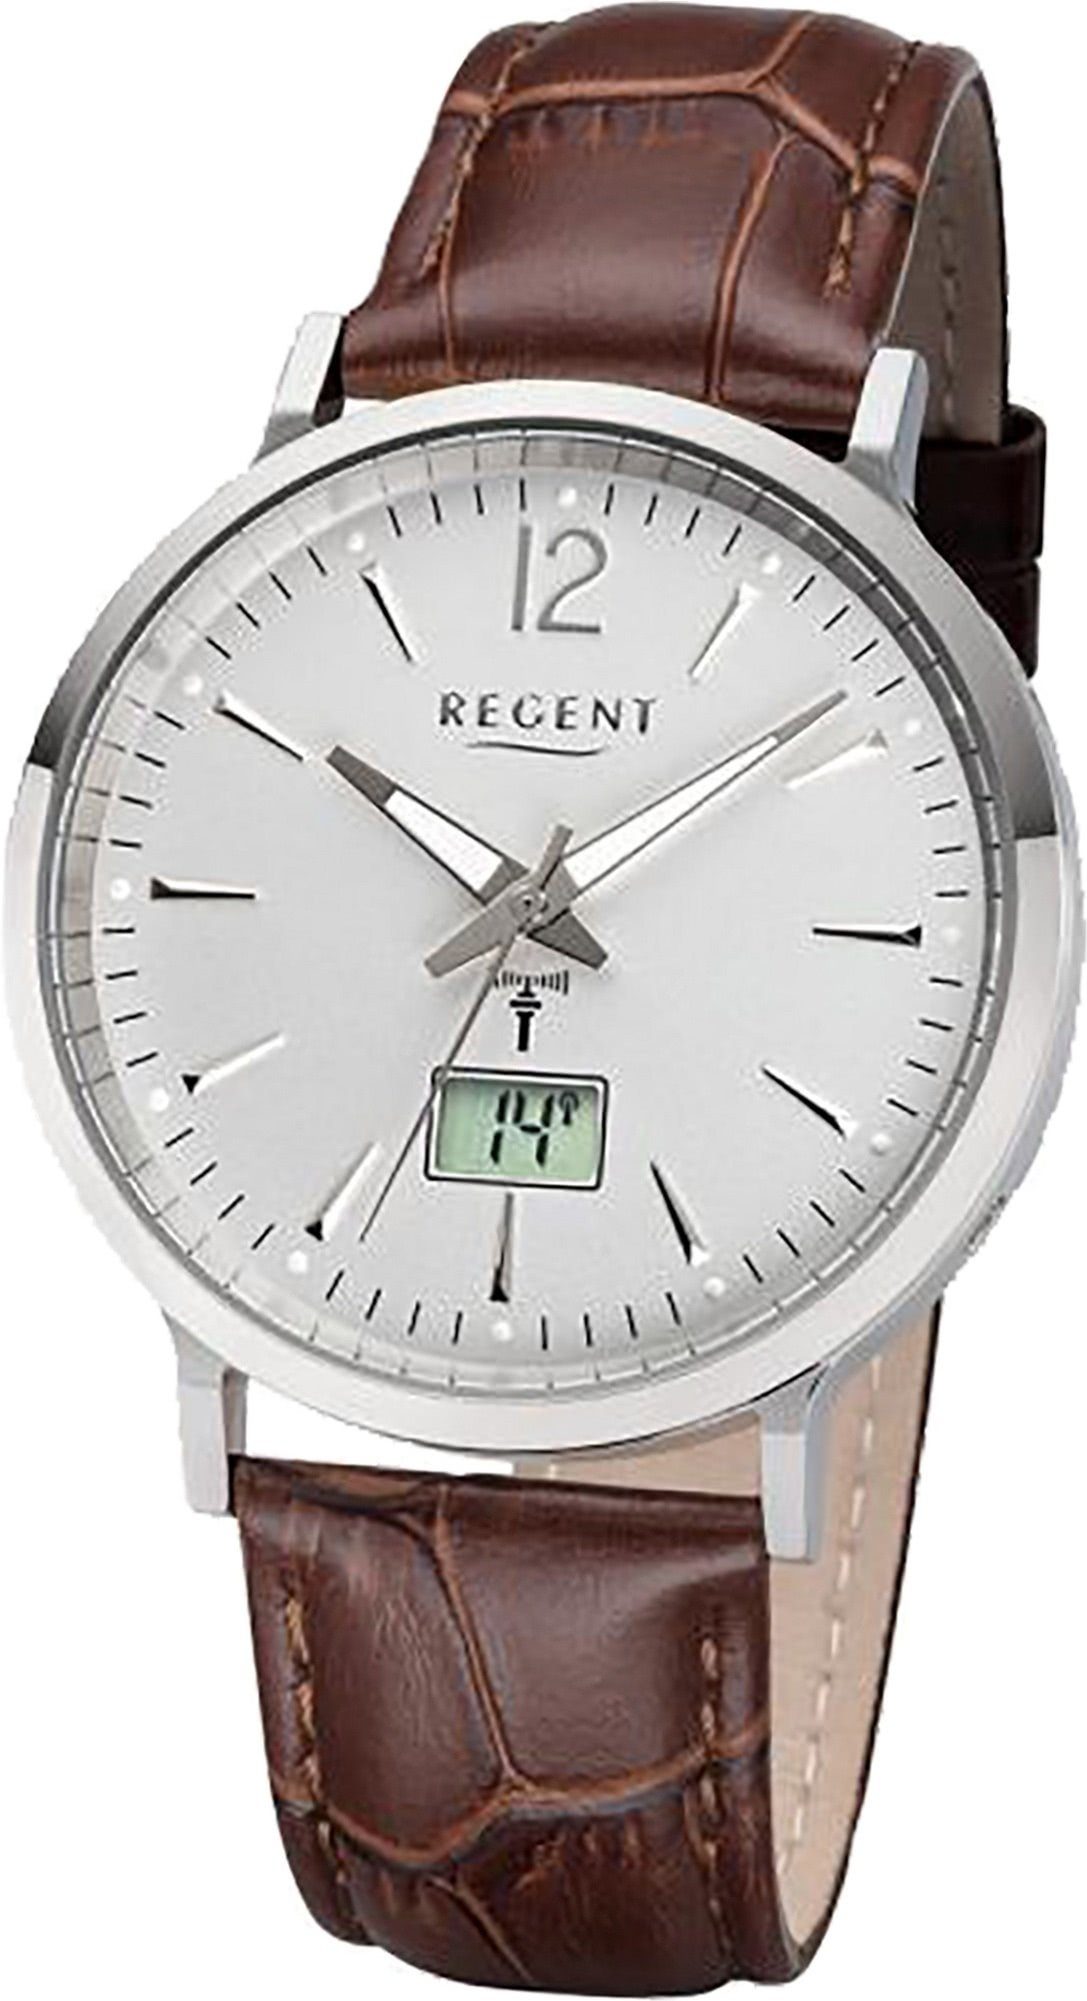 Regent Funkuhr Gehäuse rundes Leder Lederarmband, mit FR-243, Herren Regent Uhr Herrenuhr 40mm), Elegant-Style (ca